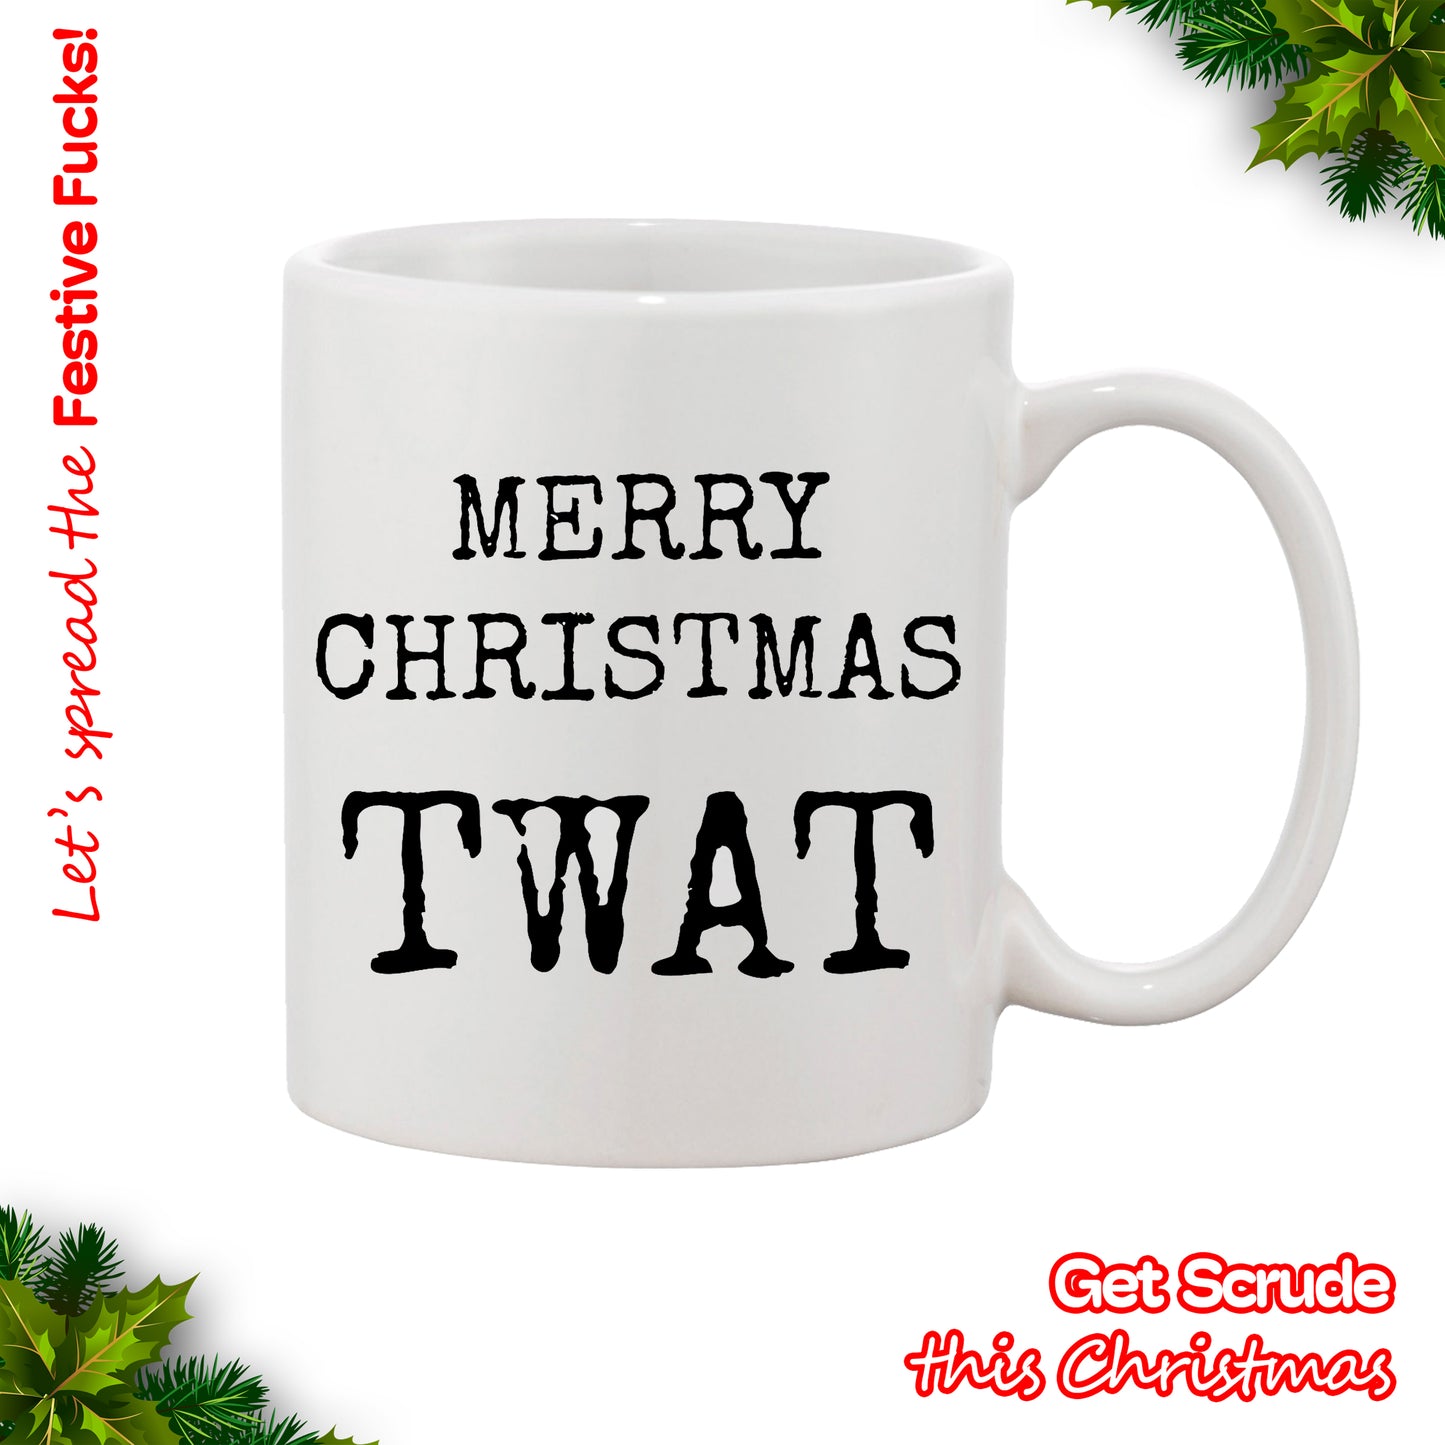 Merry Christmas Twat